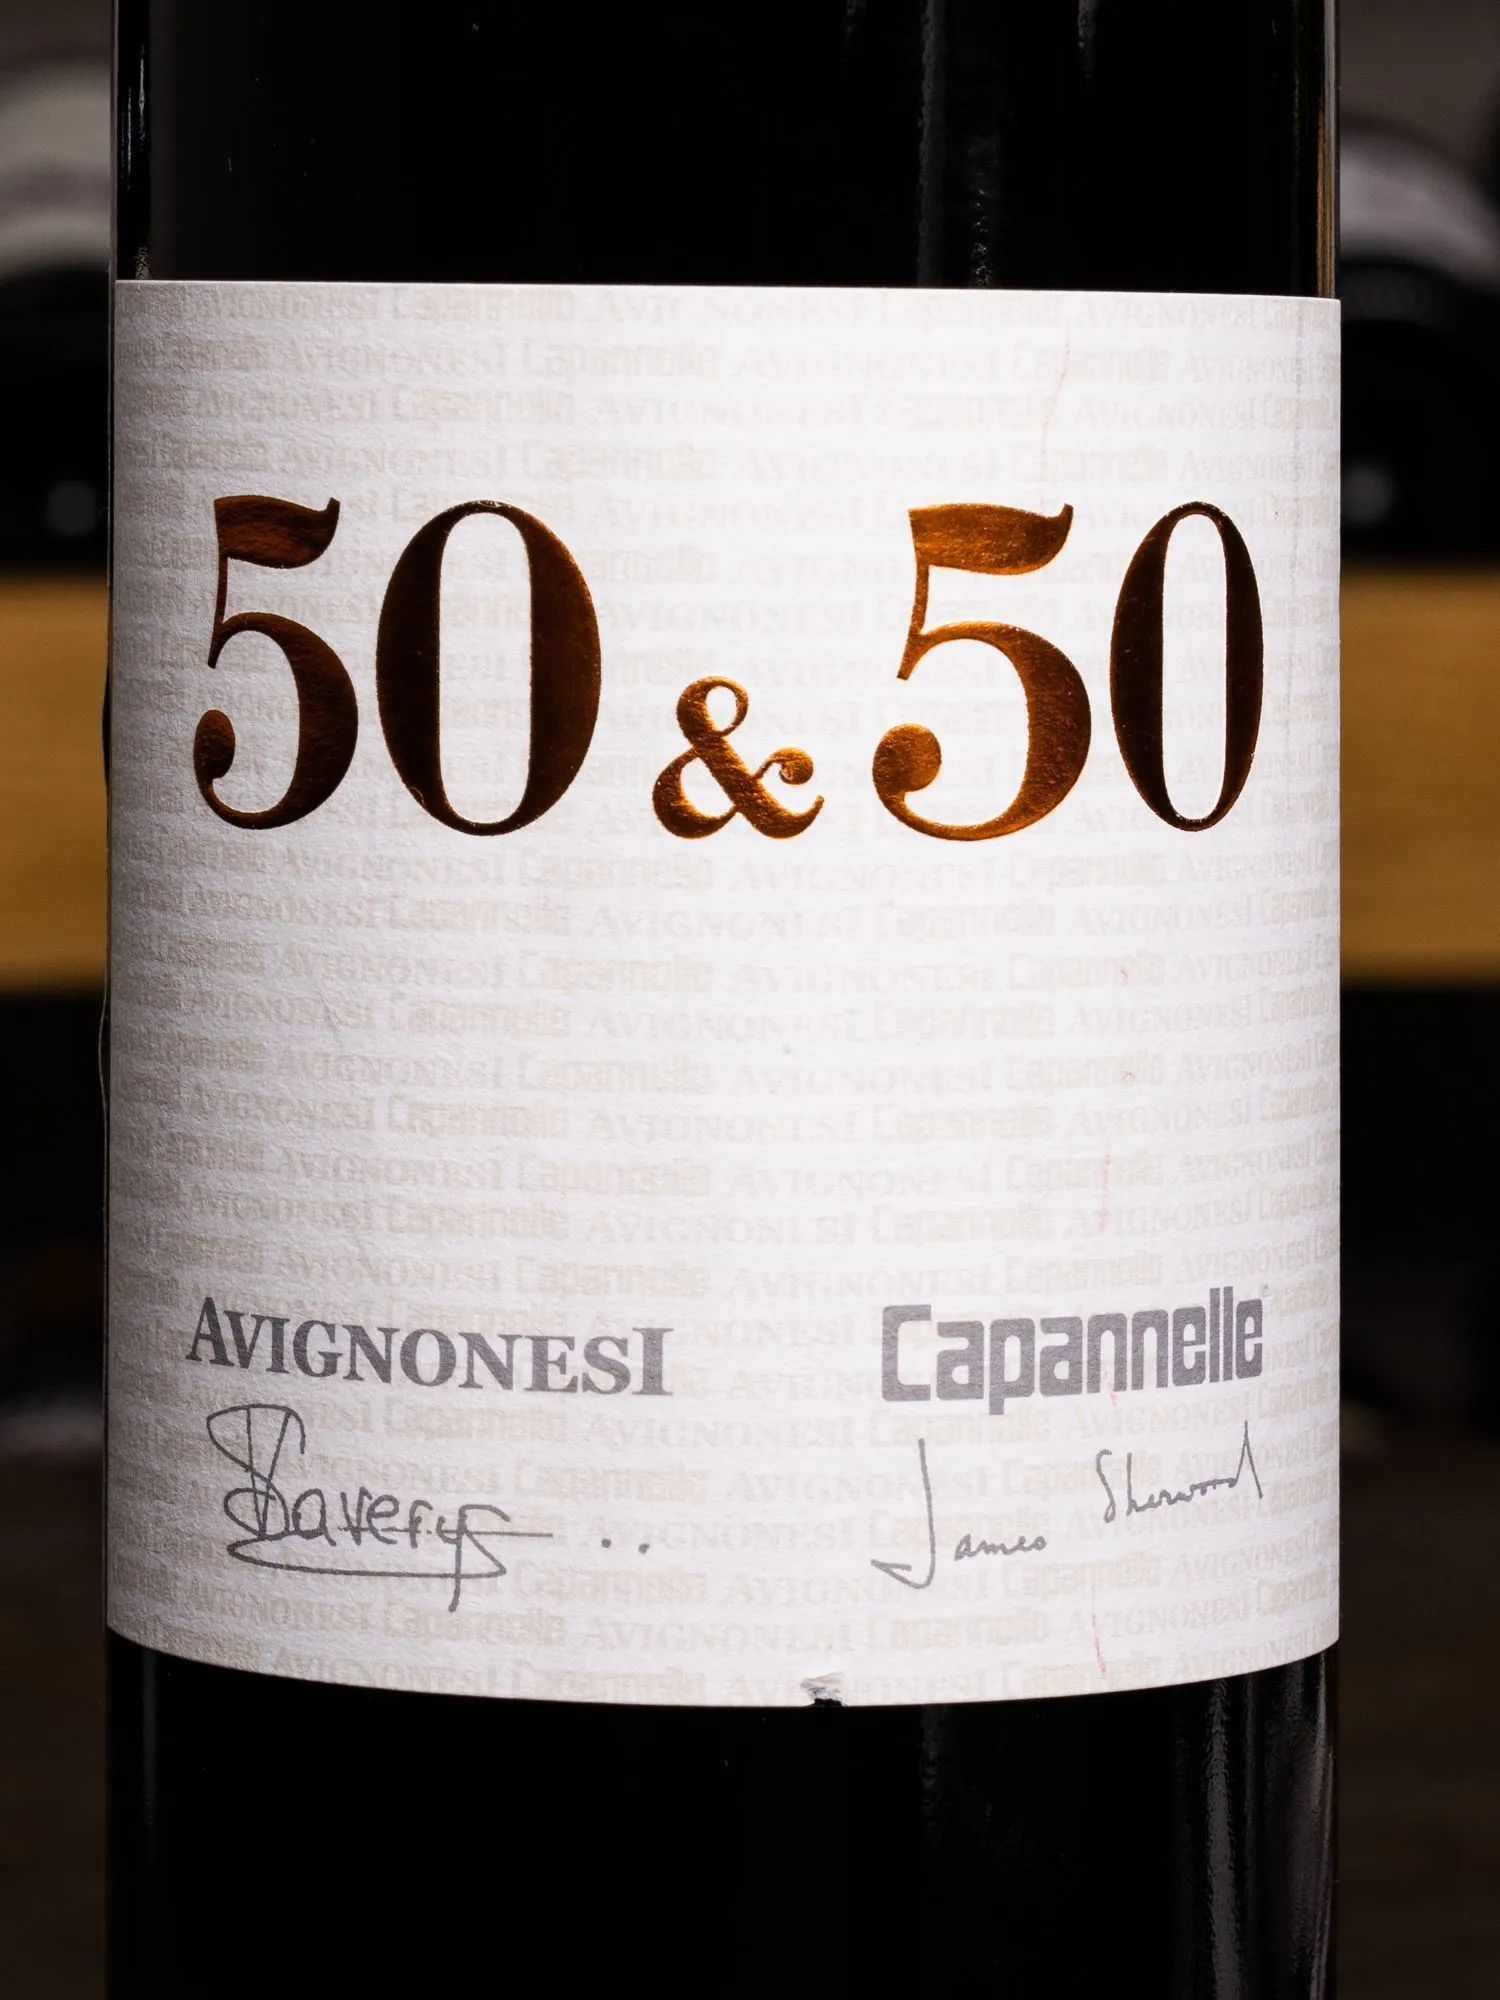 Вино Avignonesi-Capannelle 50 & 50 Toscana 2015 / Авиньонези-Капаннелле 50&50 Тоскана 2015